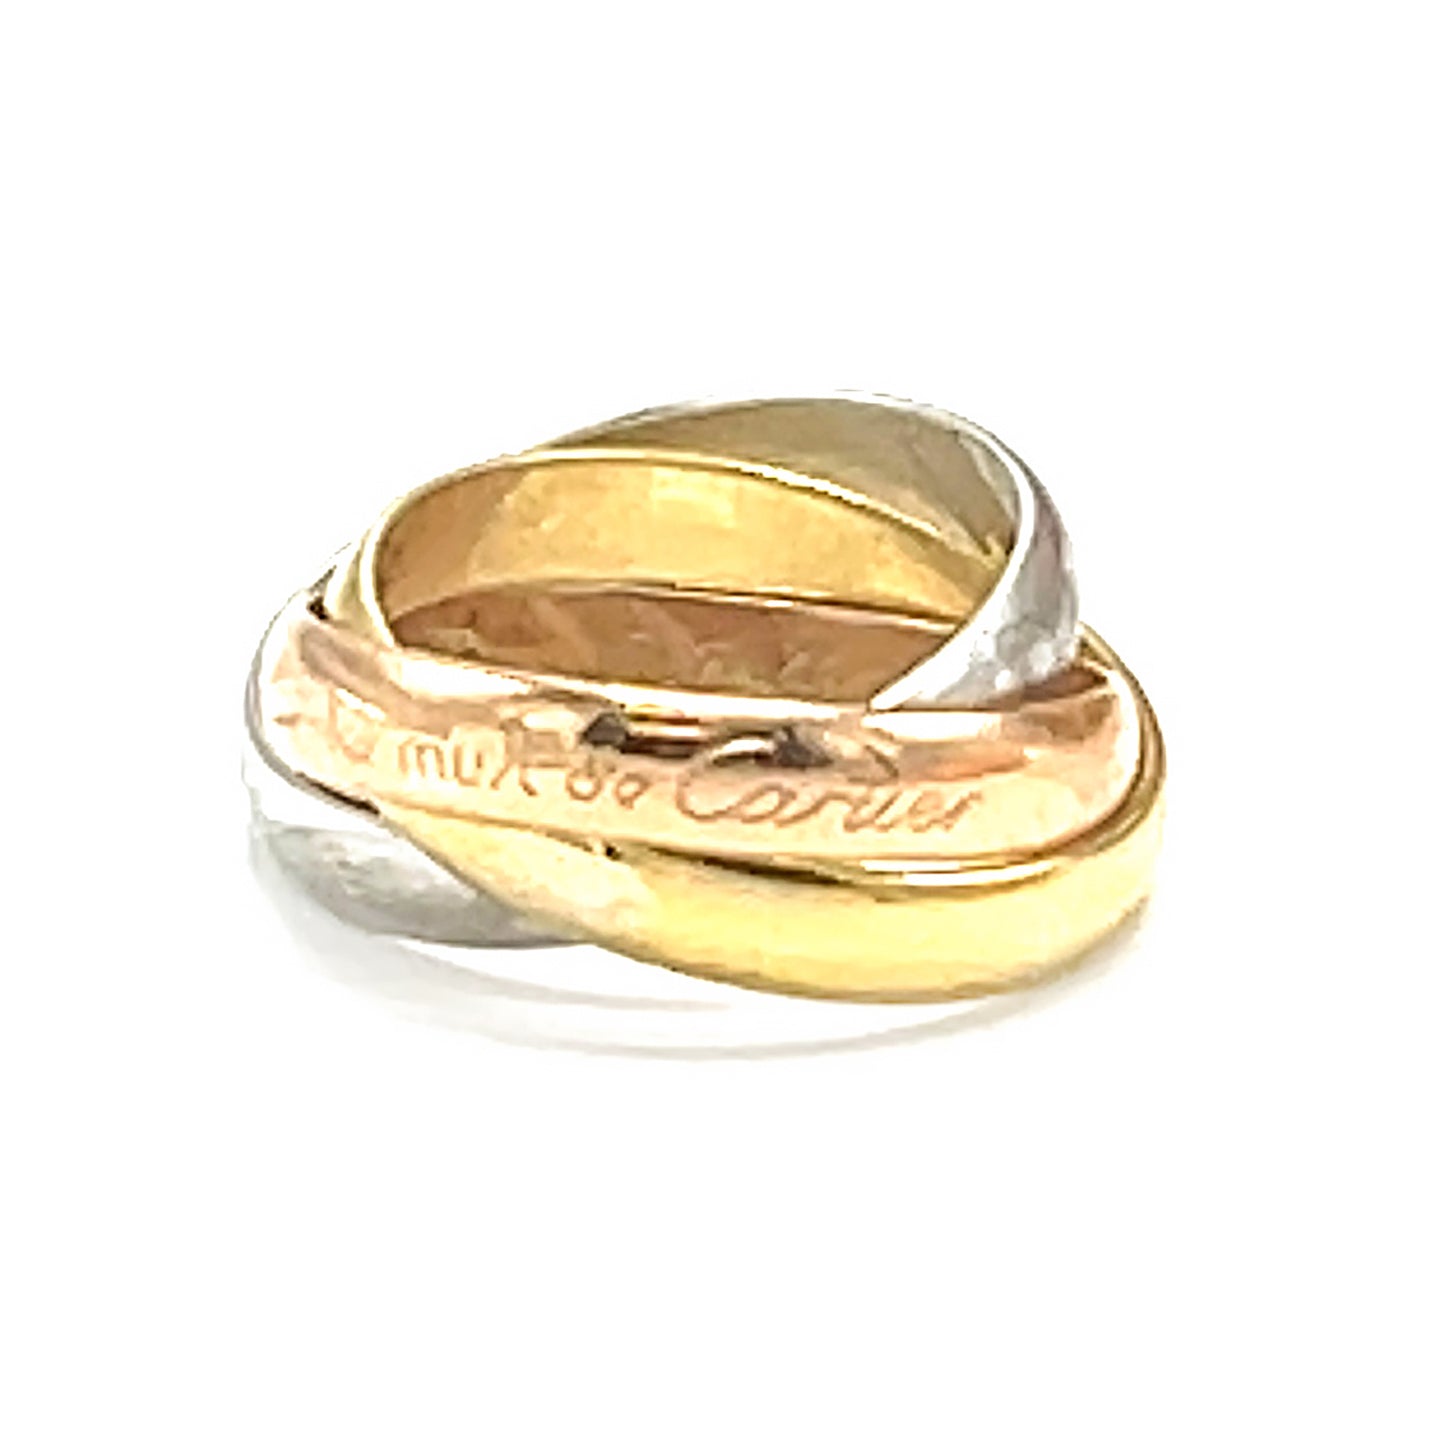 Cartier Le Must de Cartier Trinity Ring in 18k Gold Size 3.75